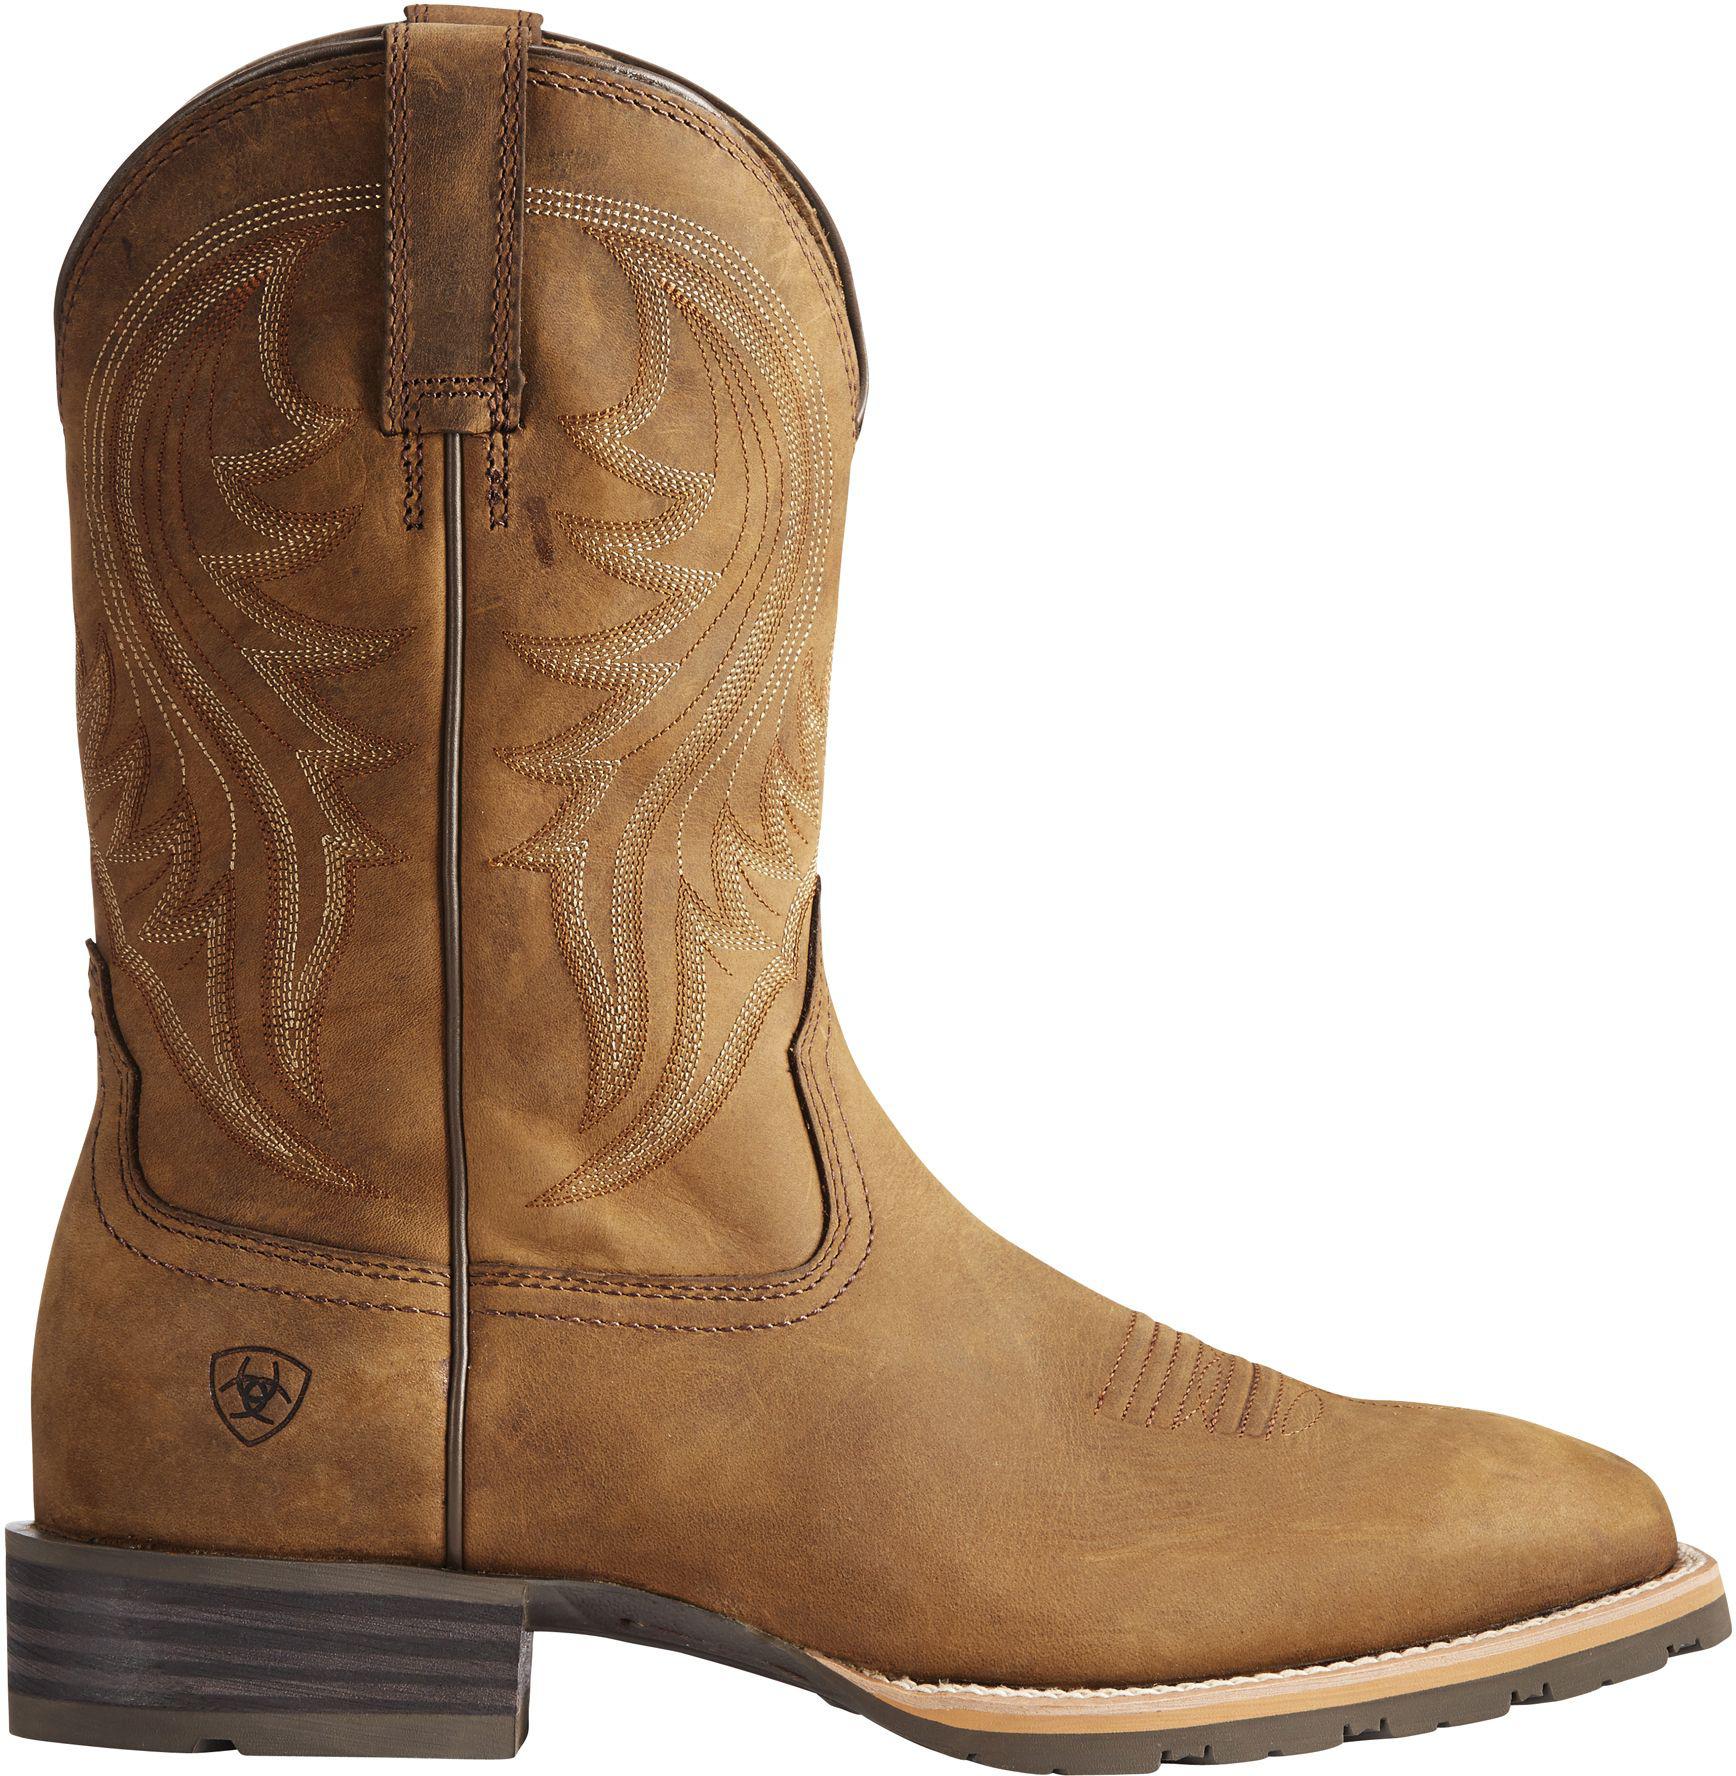 rancher work boots